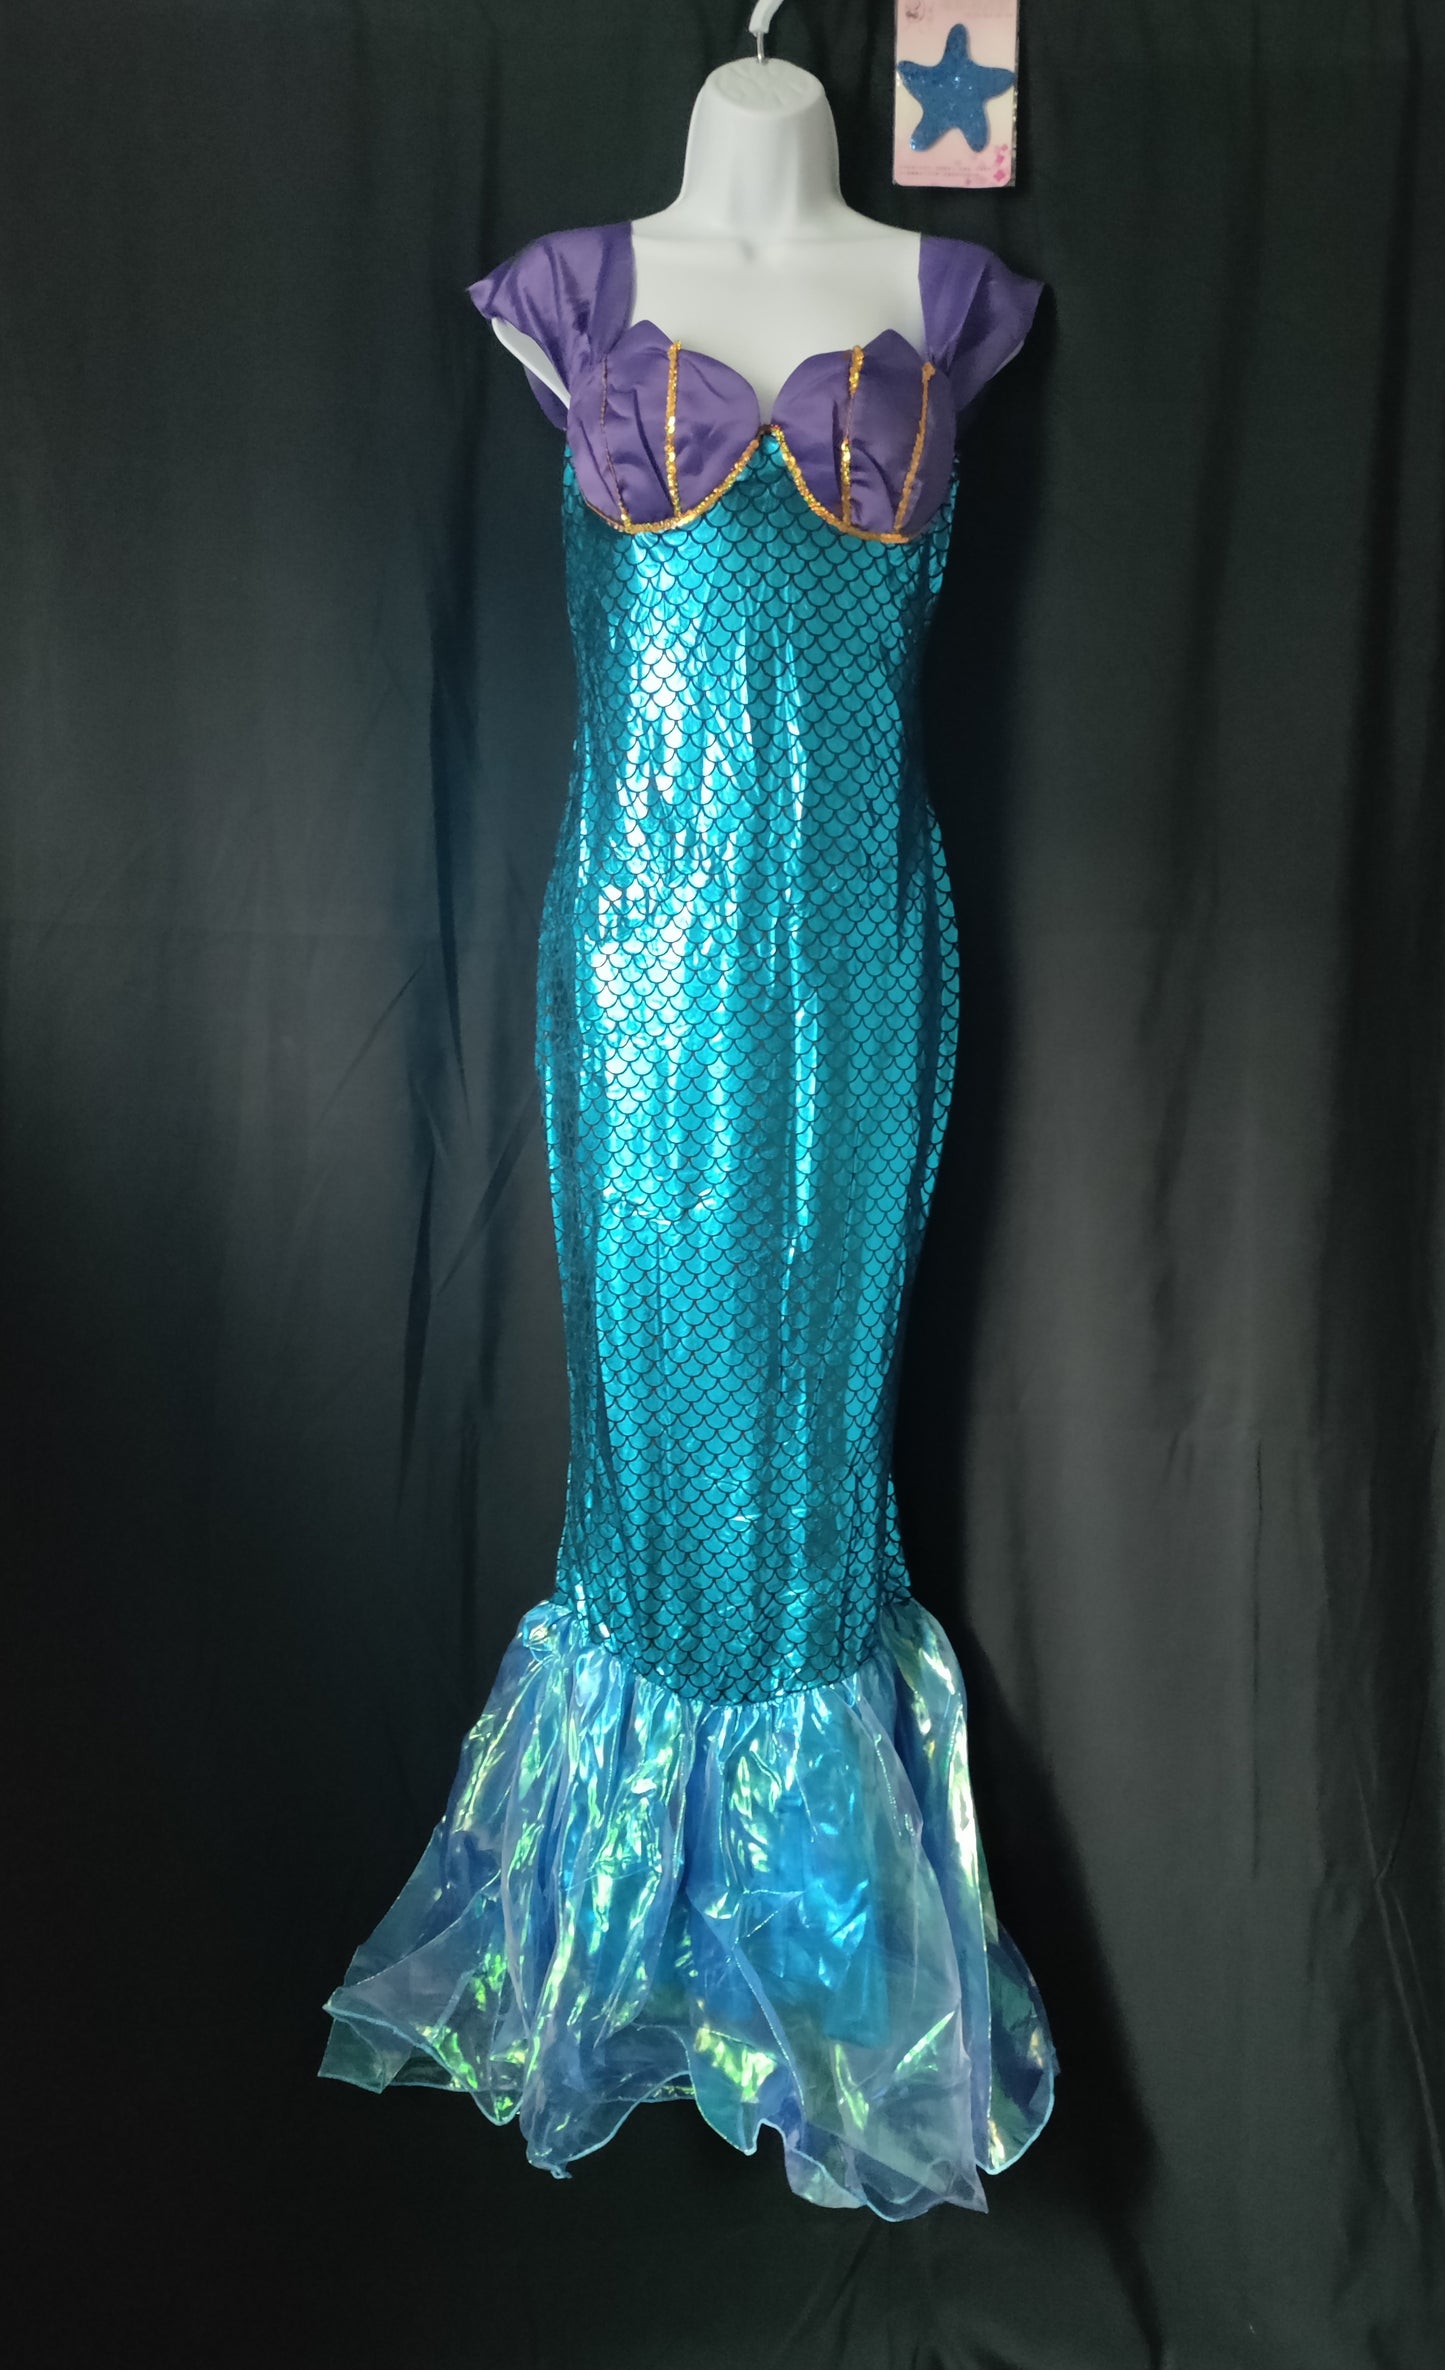 Mermaid Princess Fishtail Dress Costume w/Starfish headpiece